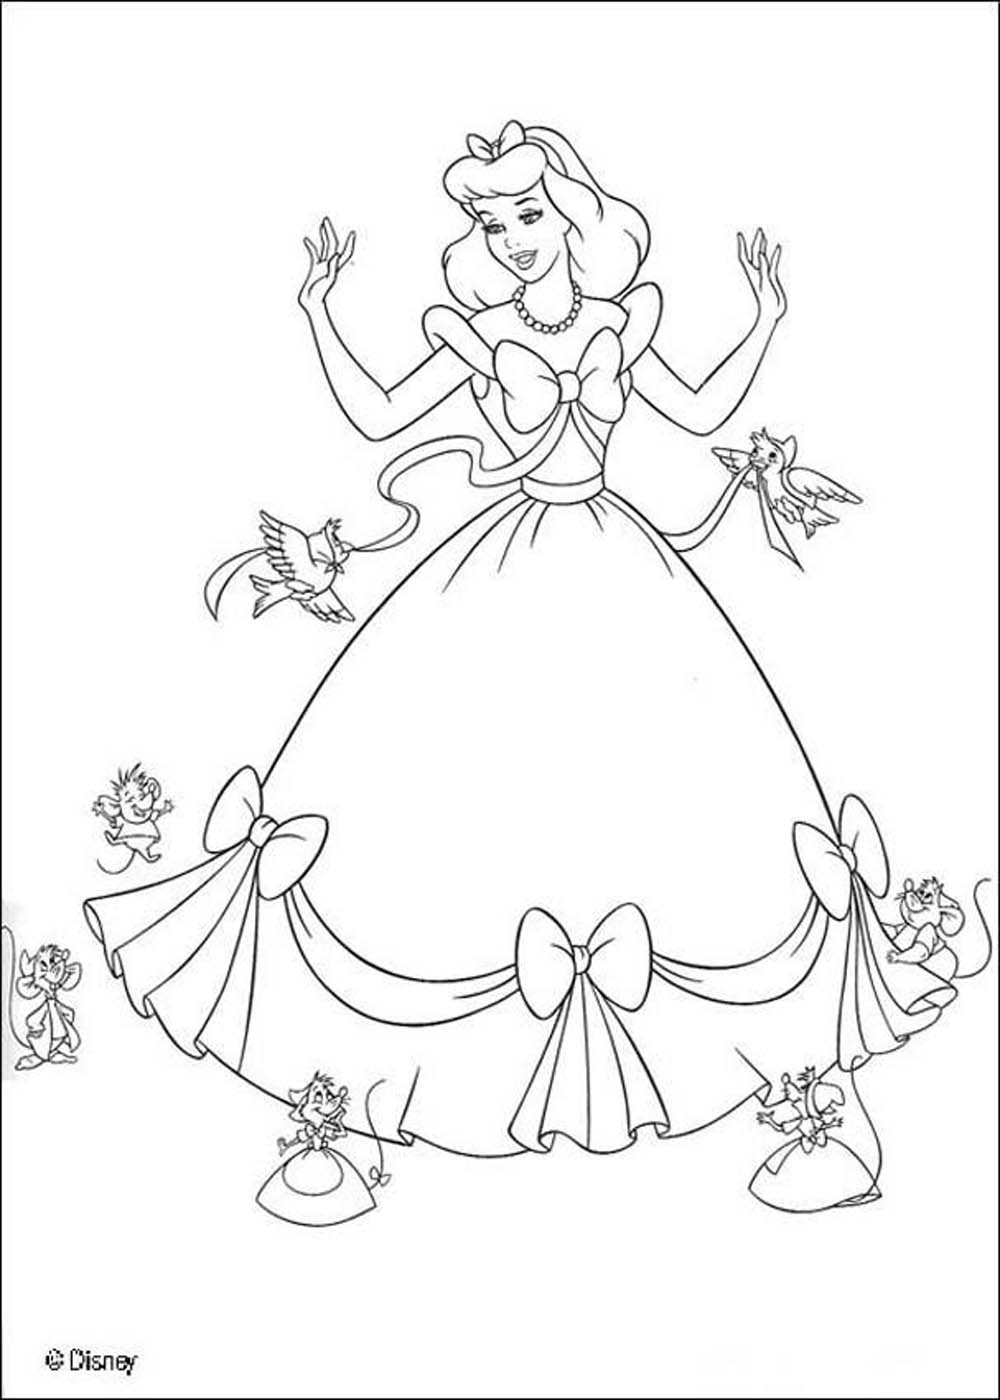 How to Draw Cinderella | Disney Princess Drawing | Easy Step by Step |  Princess drawings, Disney princess drawings, Art drawings for kids